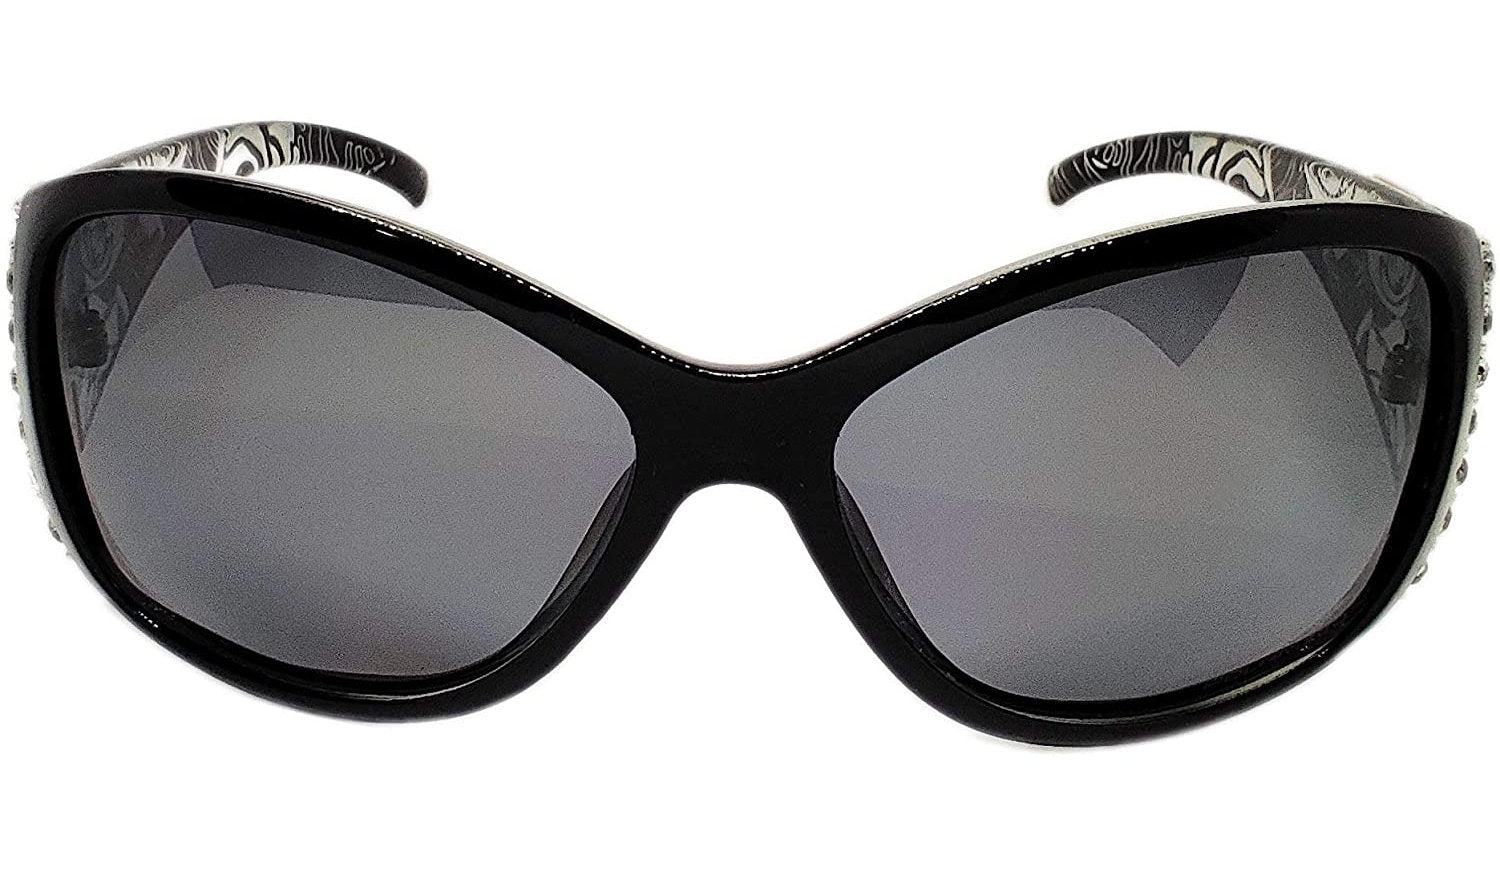 Third image: Polarized Sunglasses for Women - Premium Fashion Sunglasses - HZ Series Lule Womens Designer Sunglasses